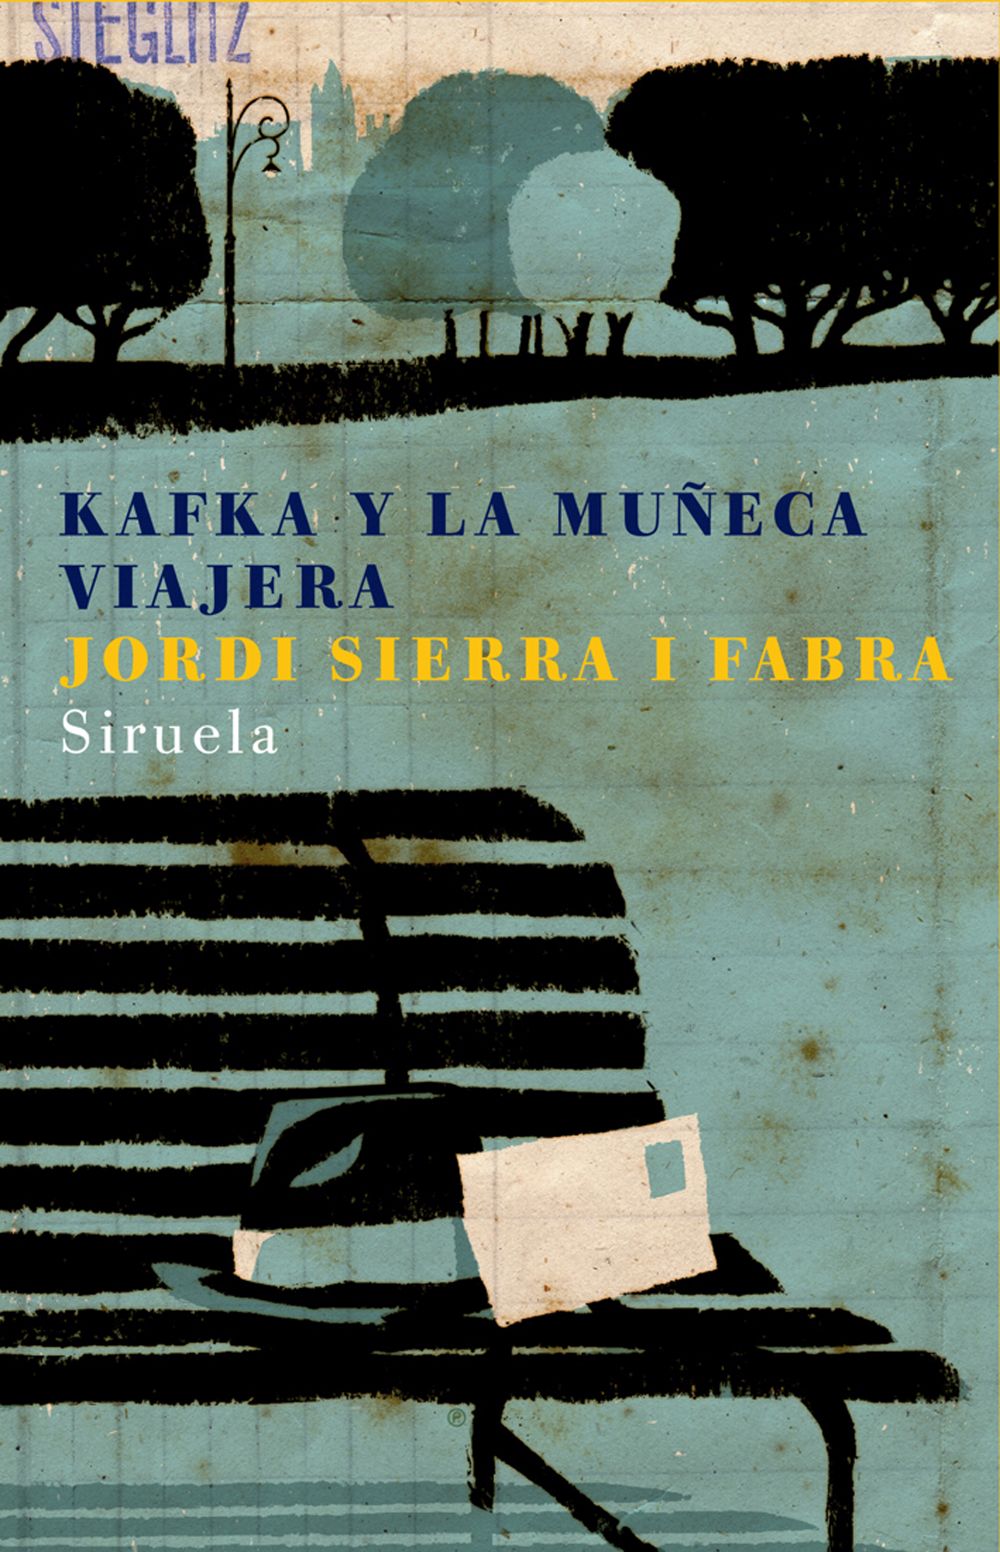 Kafka y la muñeca viajera, de Jordi Sierra y Fabra